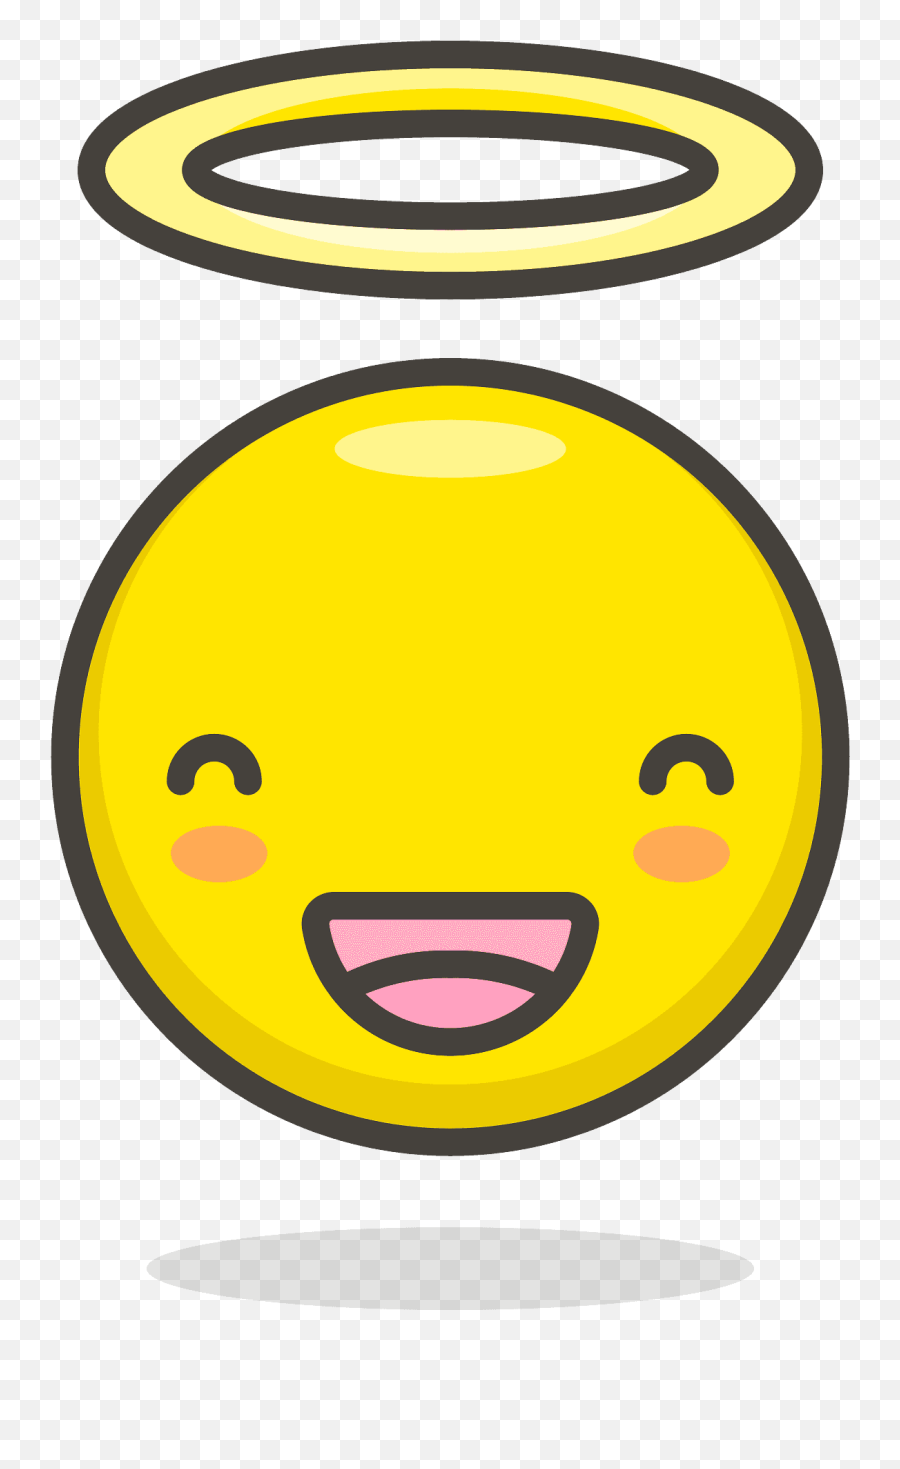 077 - Smiling Face With Halo Emoji,Halo Emoji